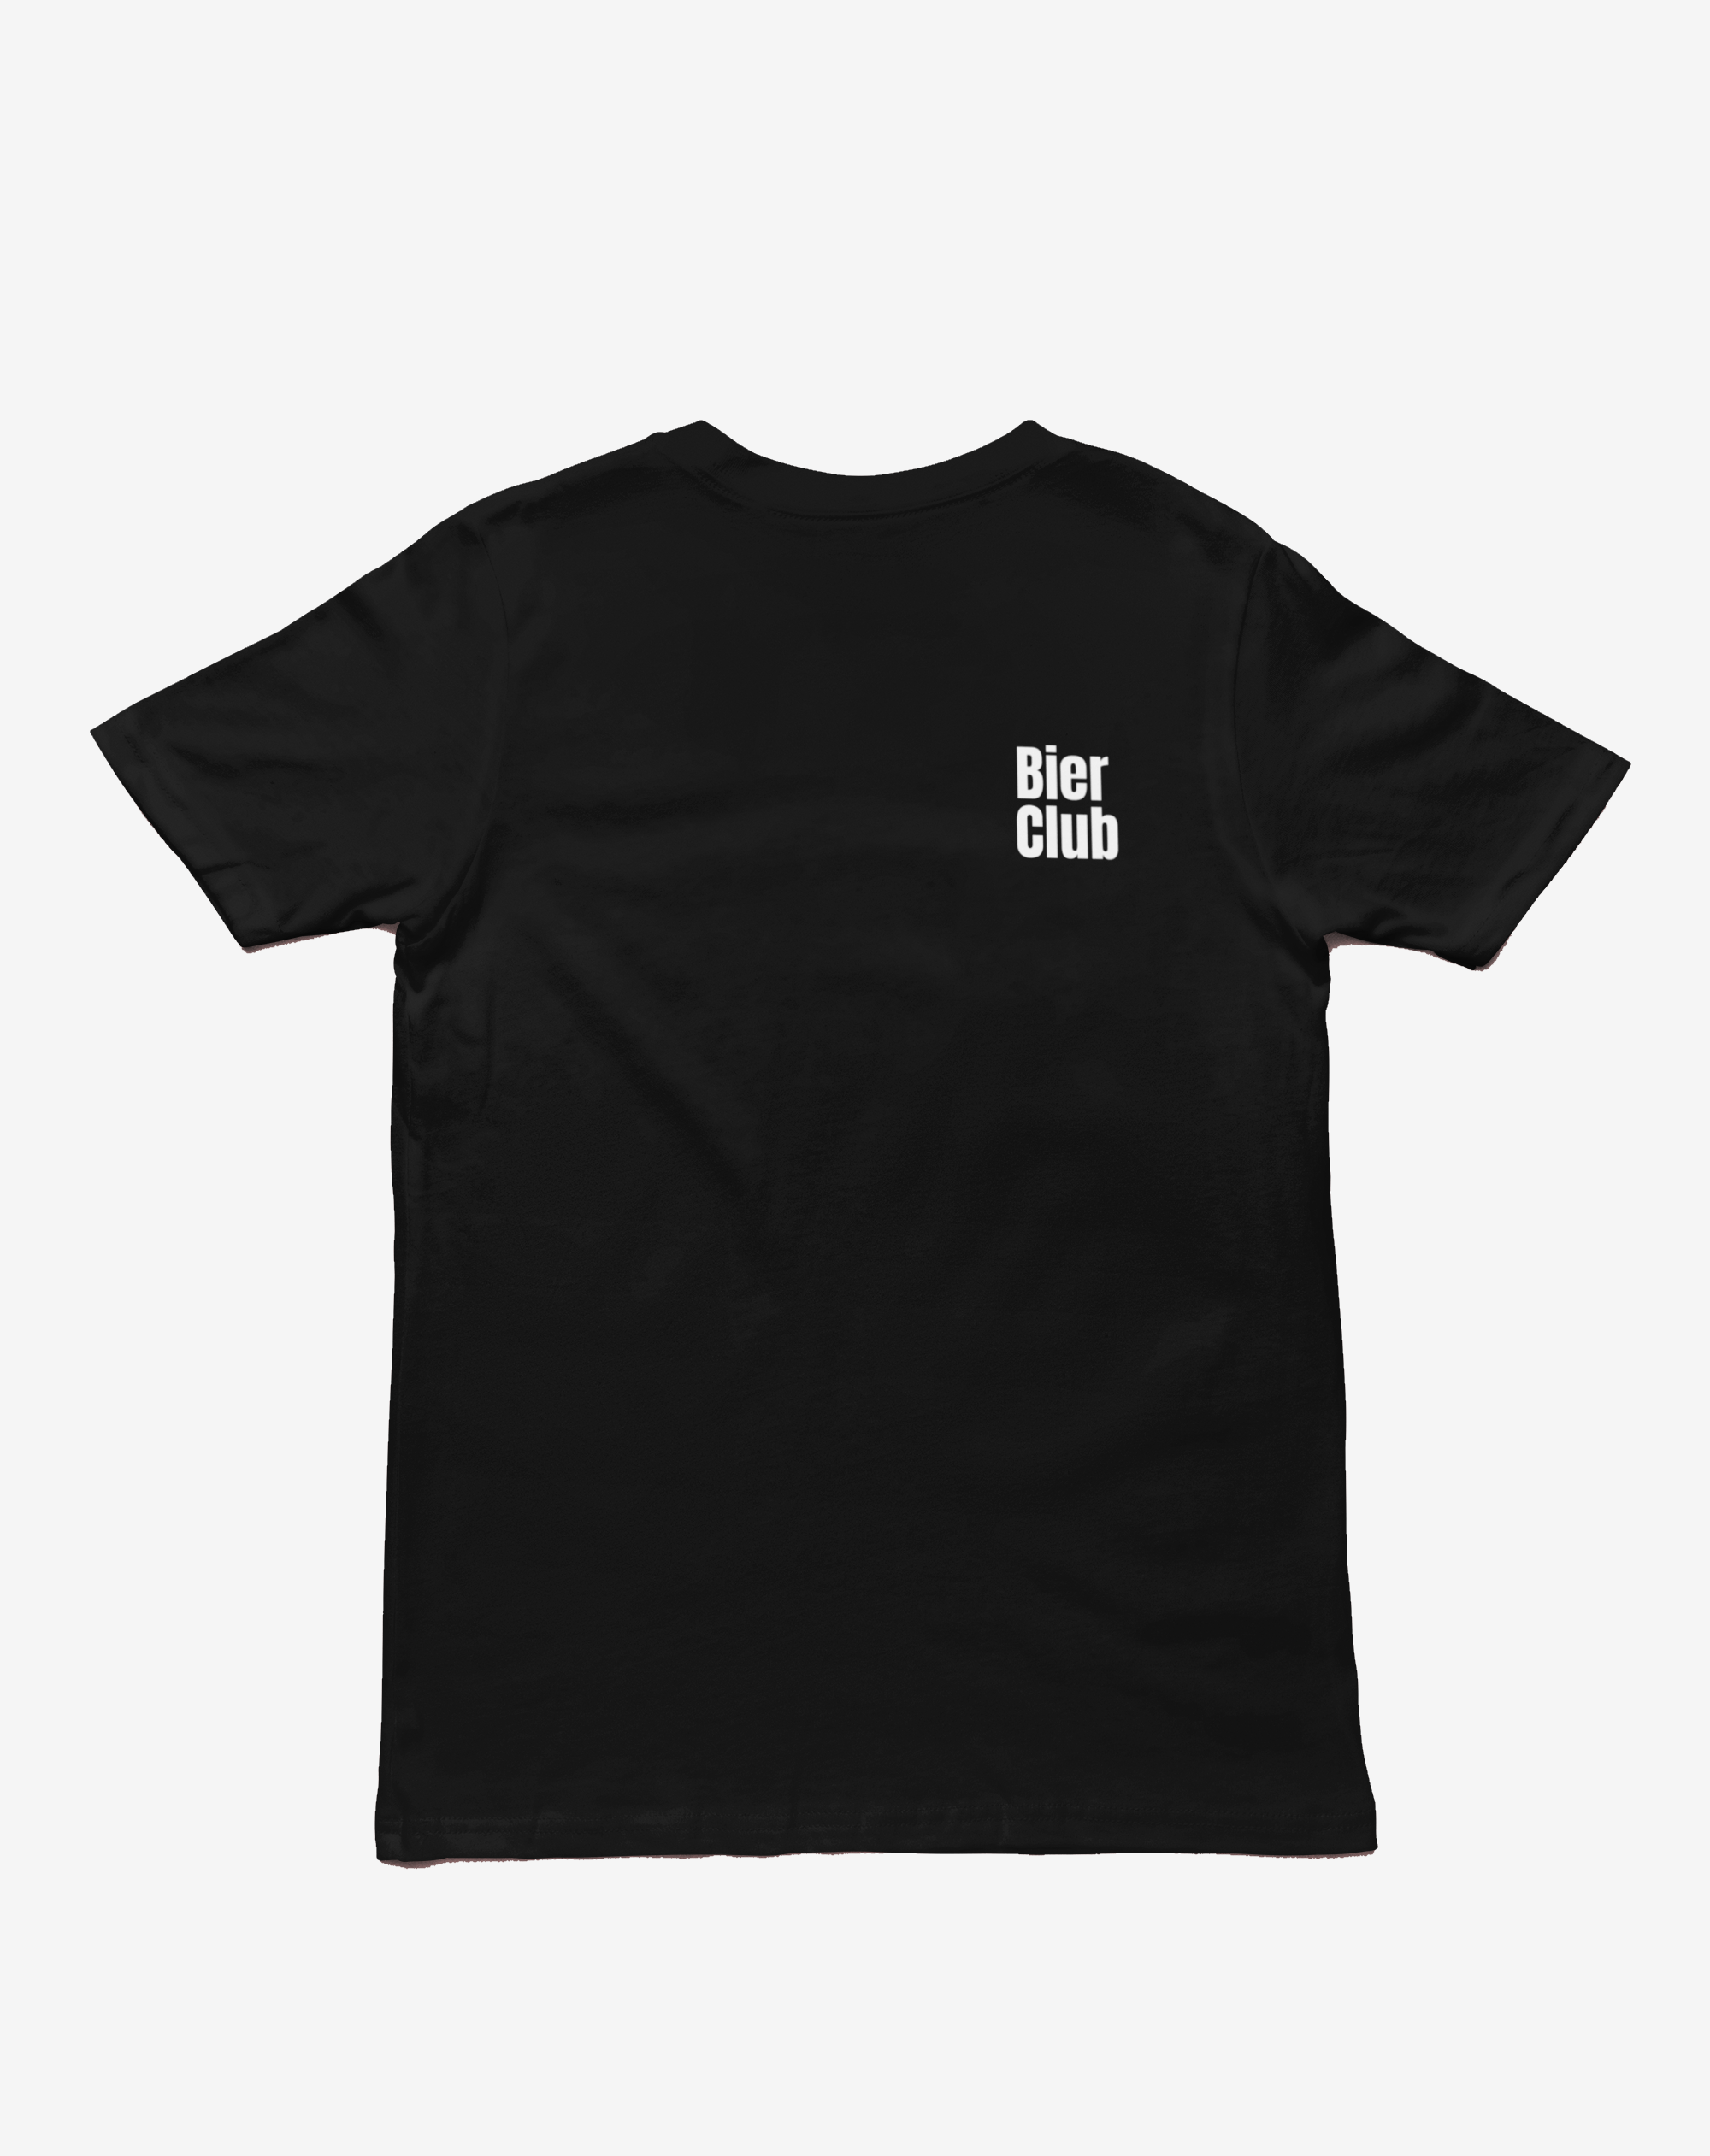 "Bier Club" exclusive T-Shirt